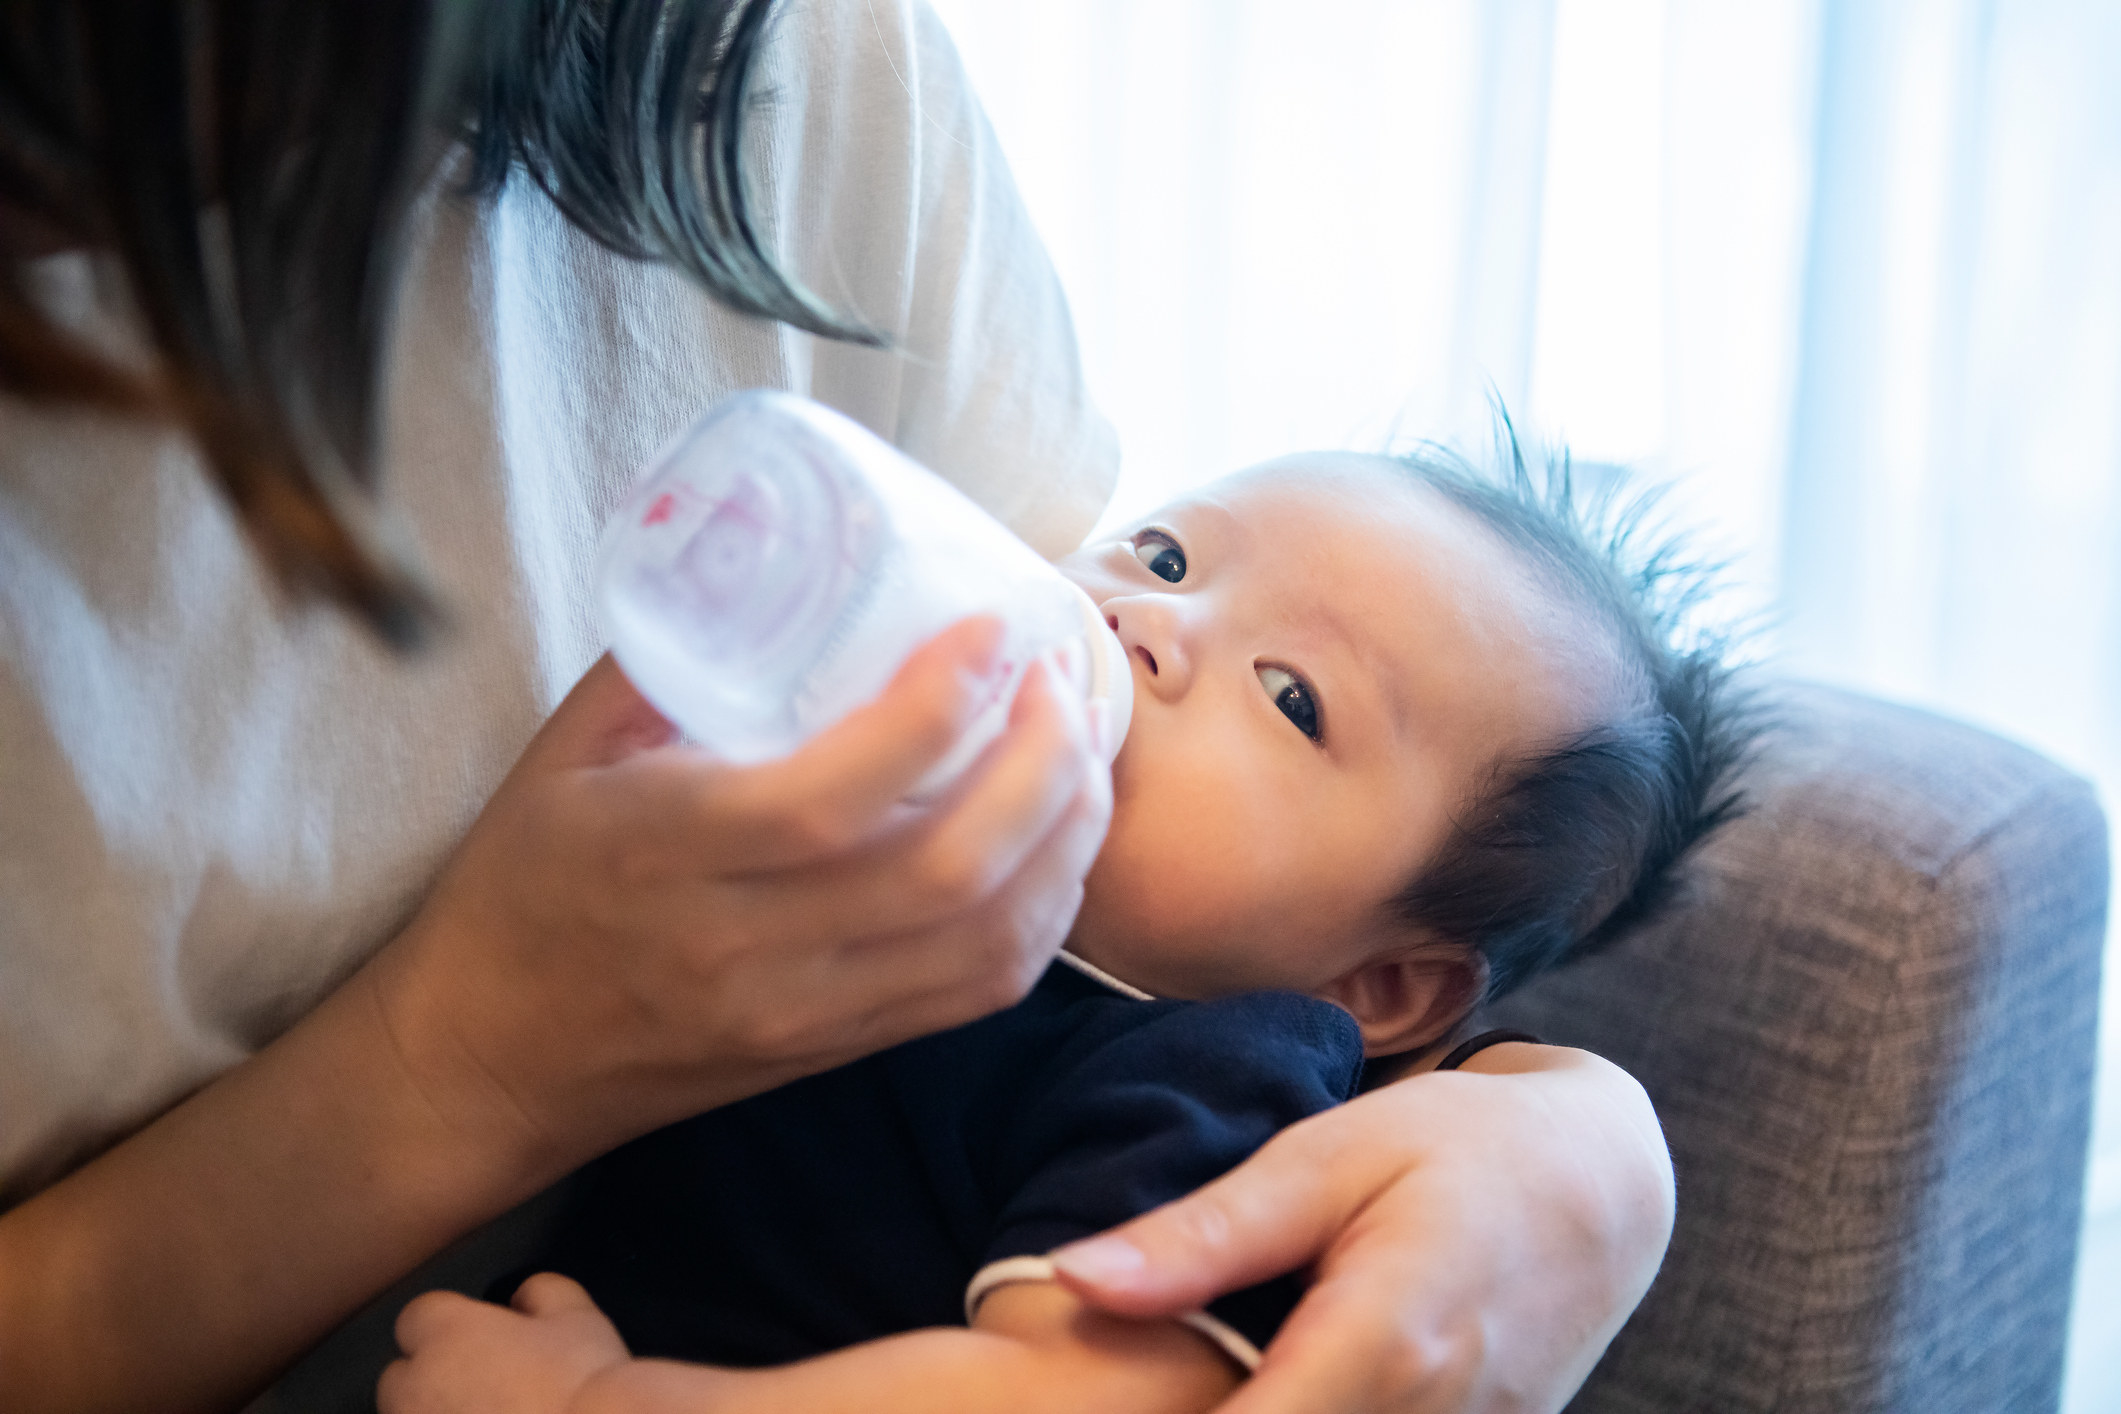 A person bottle feeding a baby